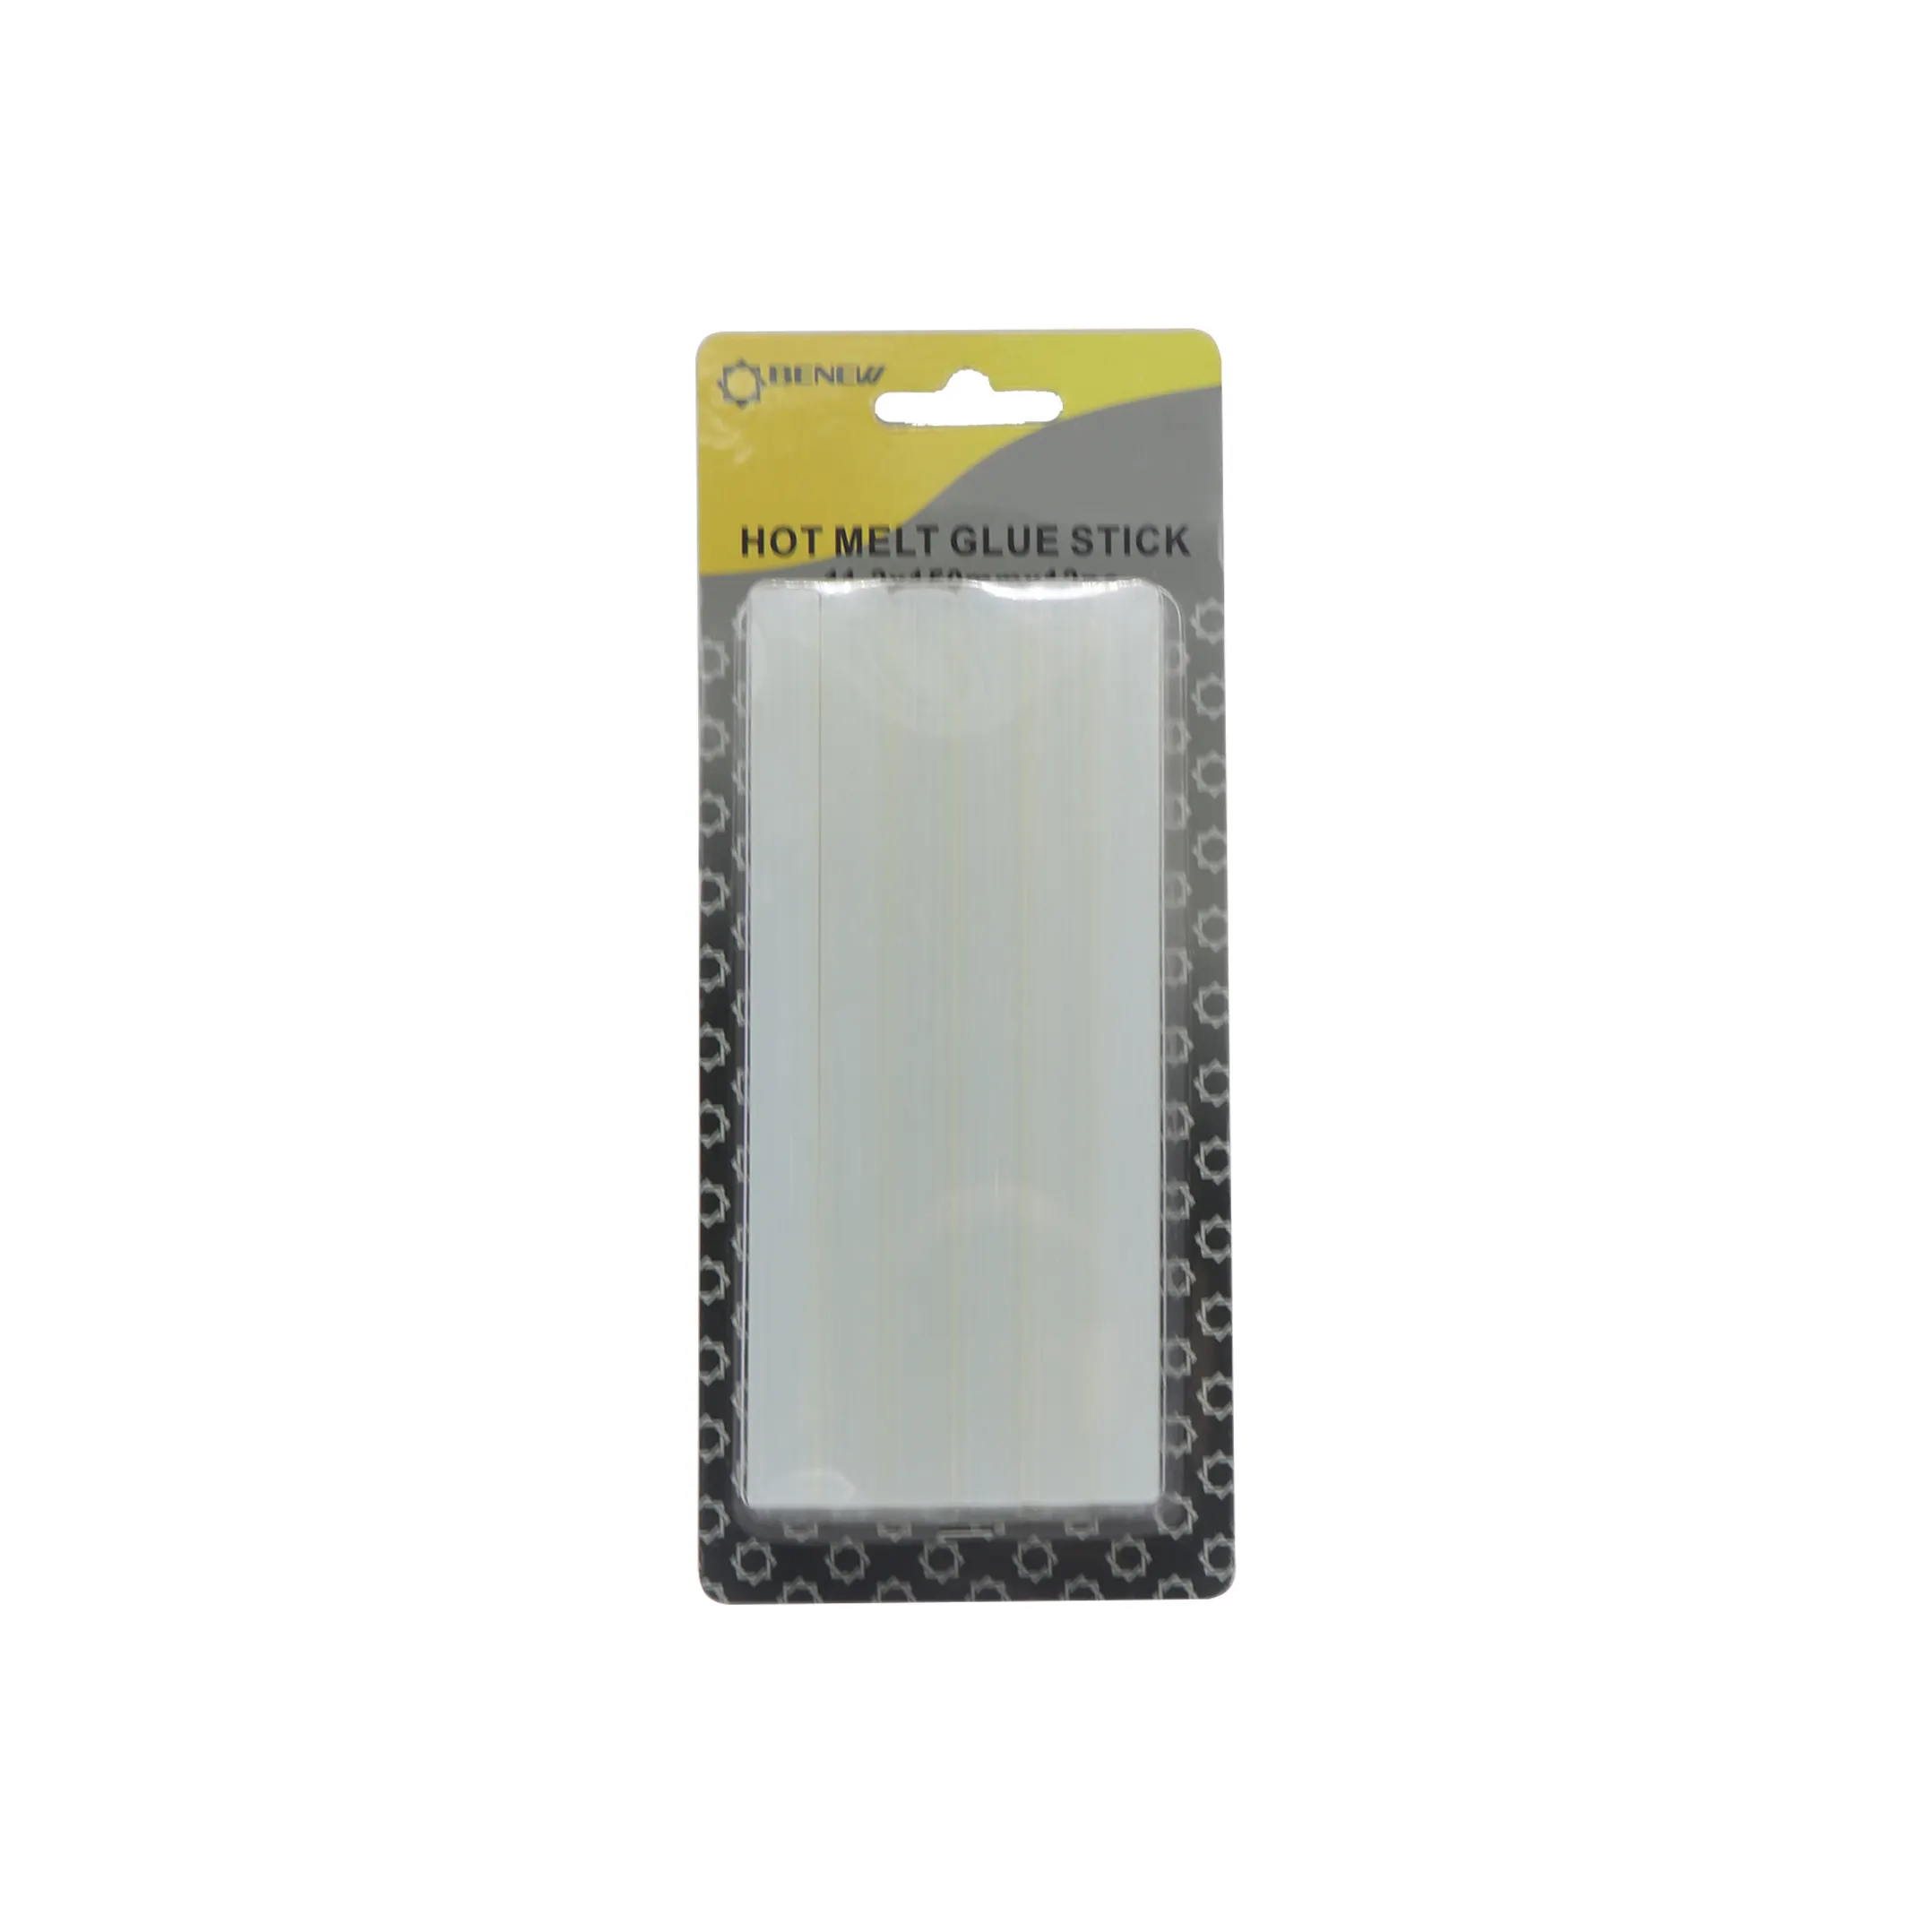 Resin EVA transparent hot melt glue stick adhesive for crafts adhesive